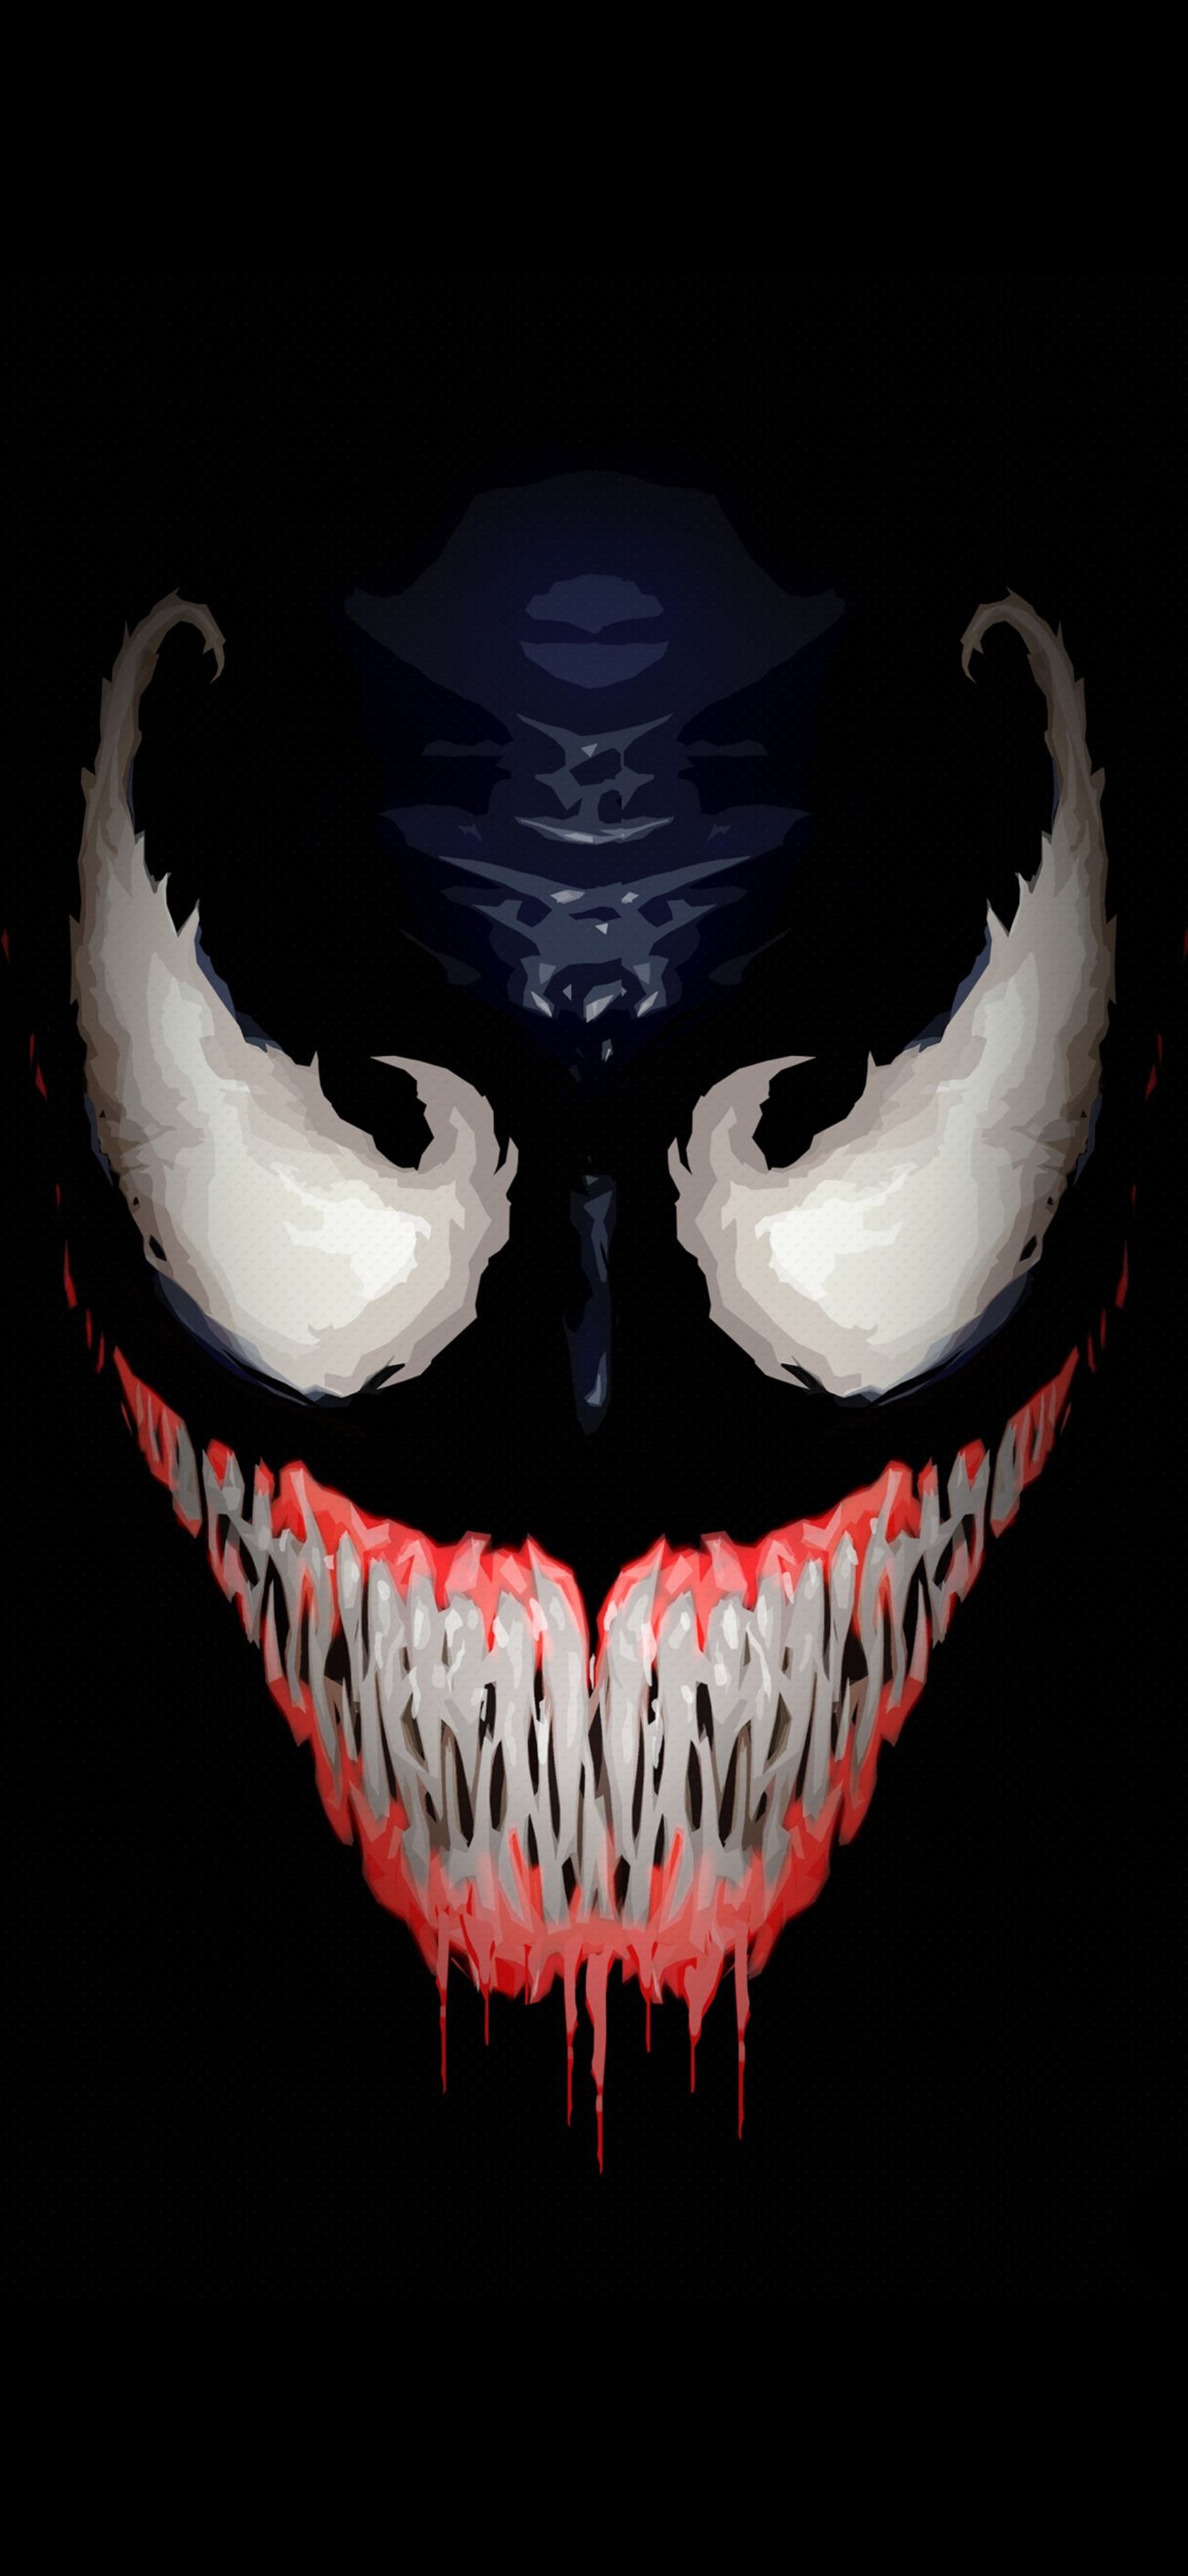 Venom - Wallpapers Central